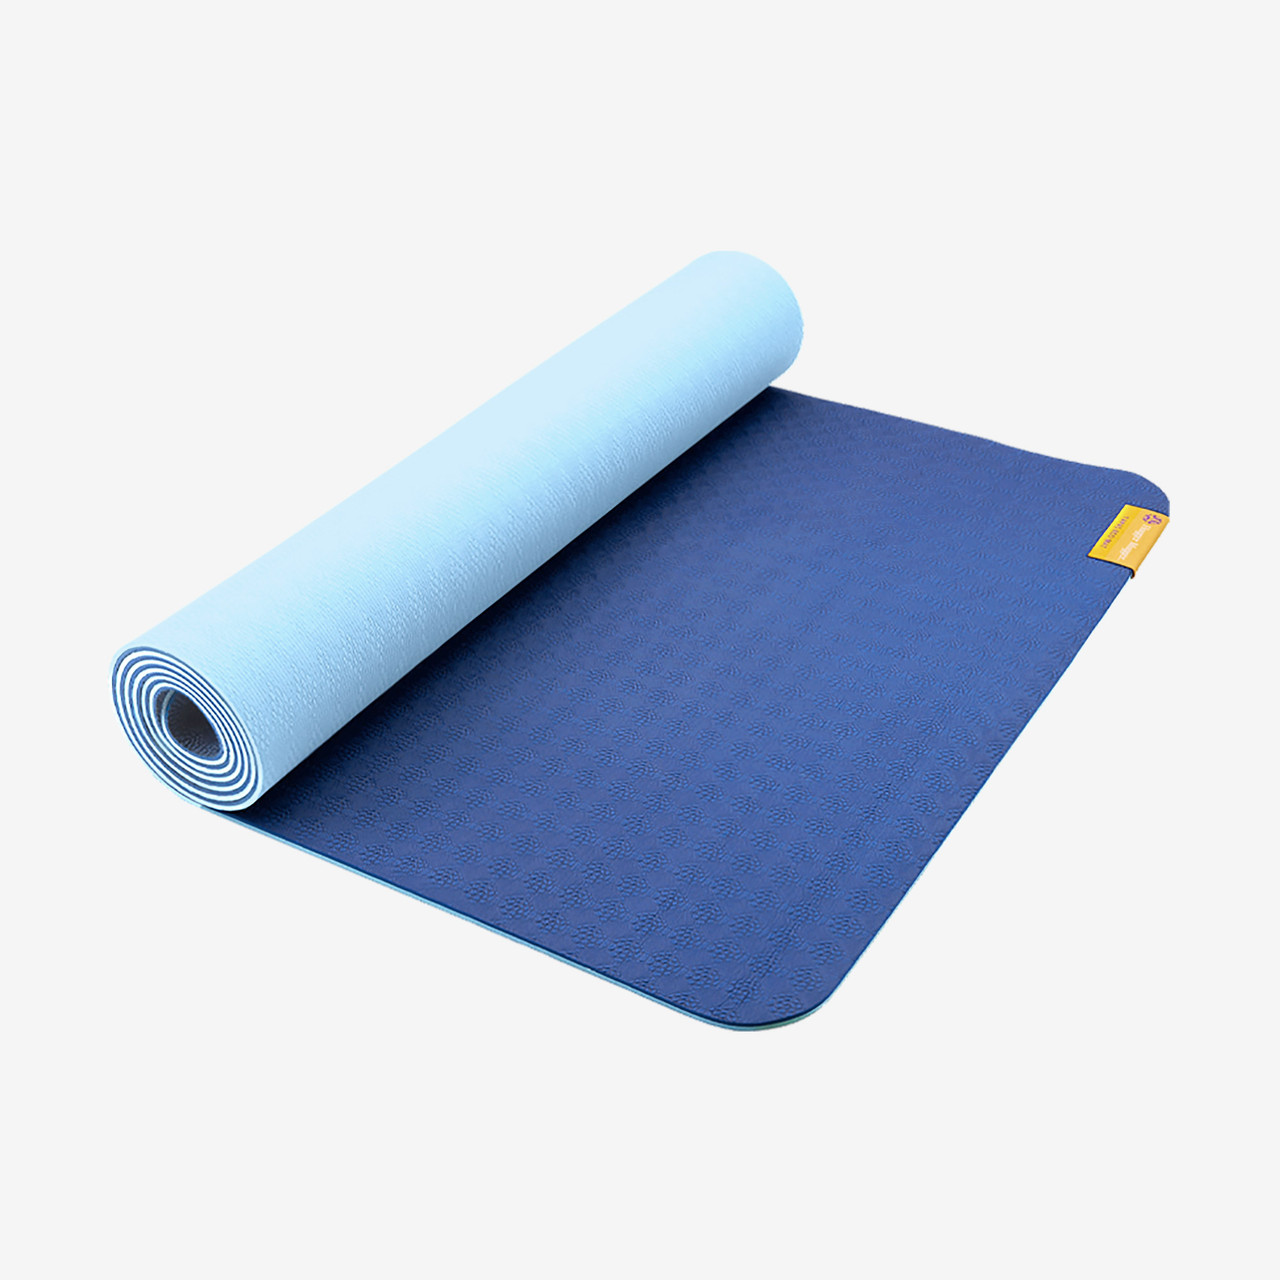 Foam Yoga Block - Aqua Sky - To provide more support for your yoga